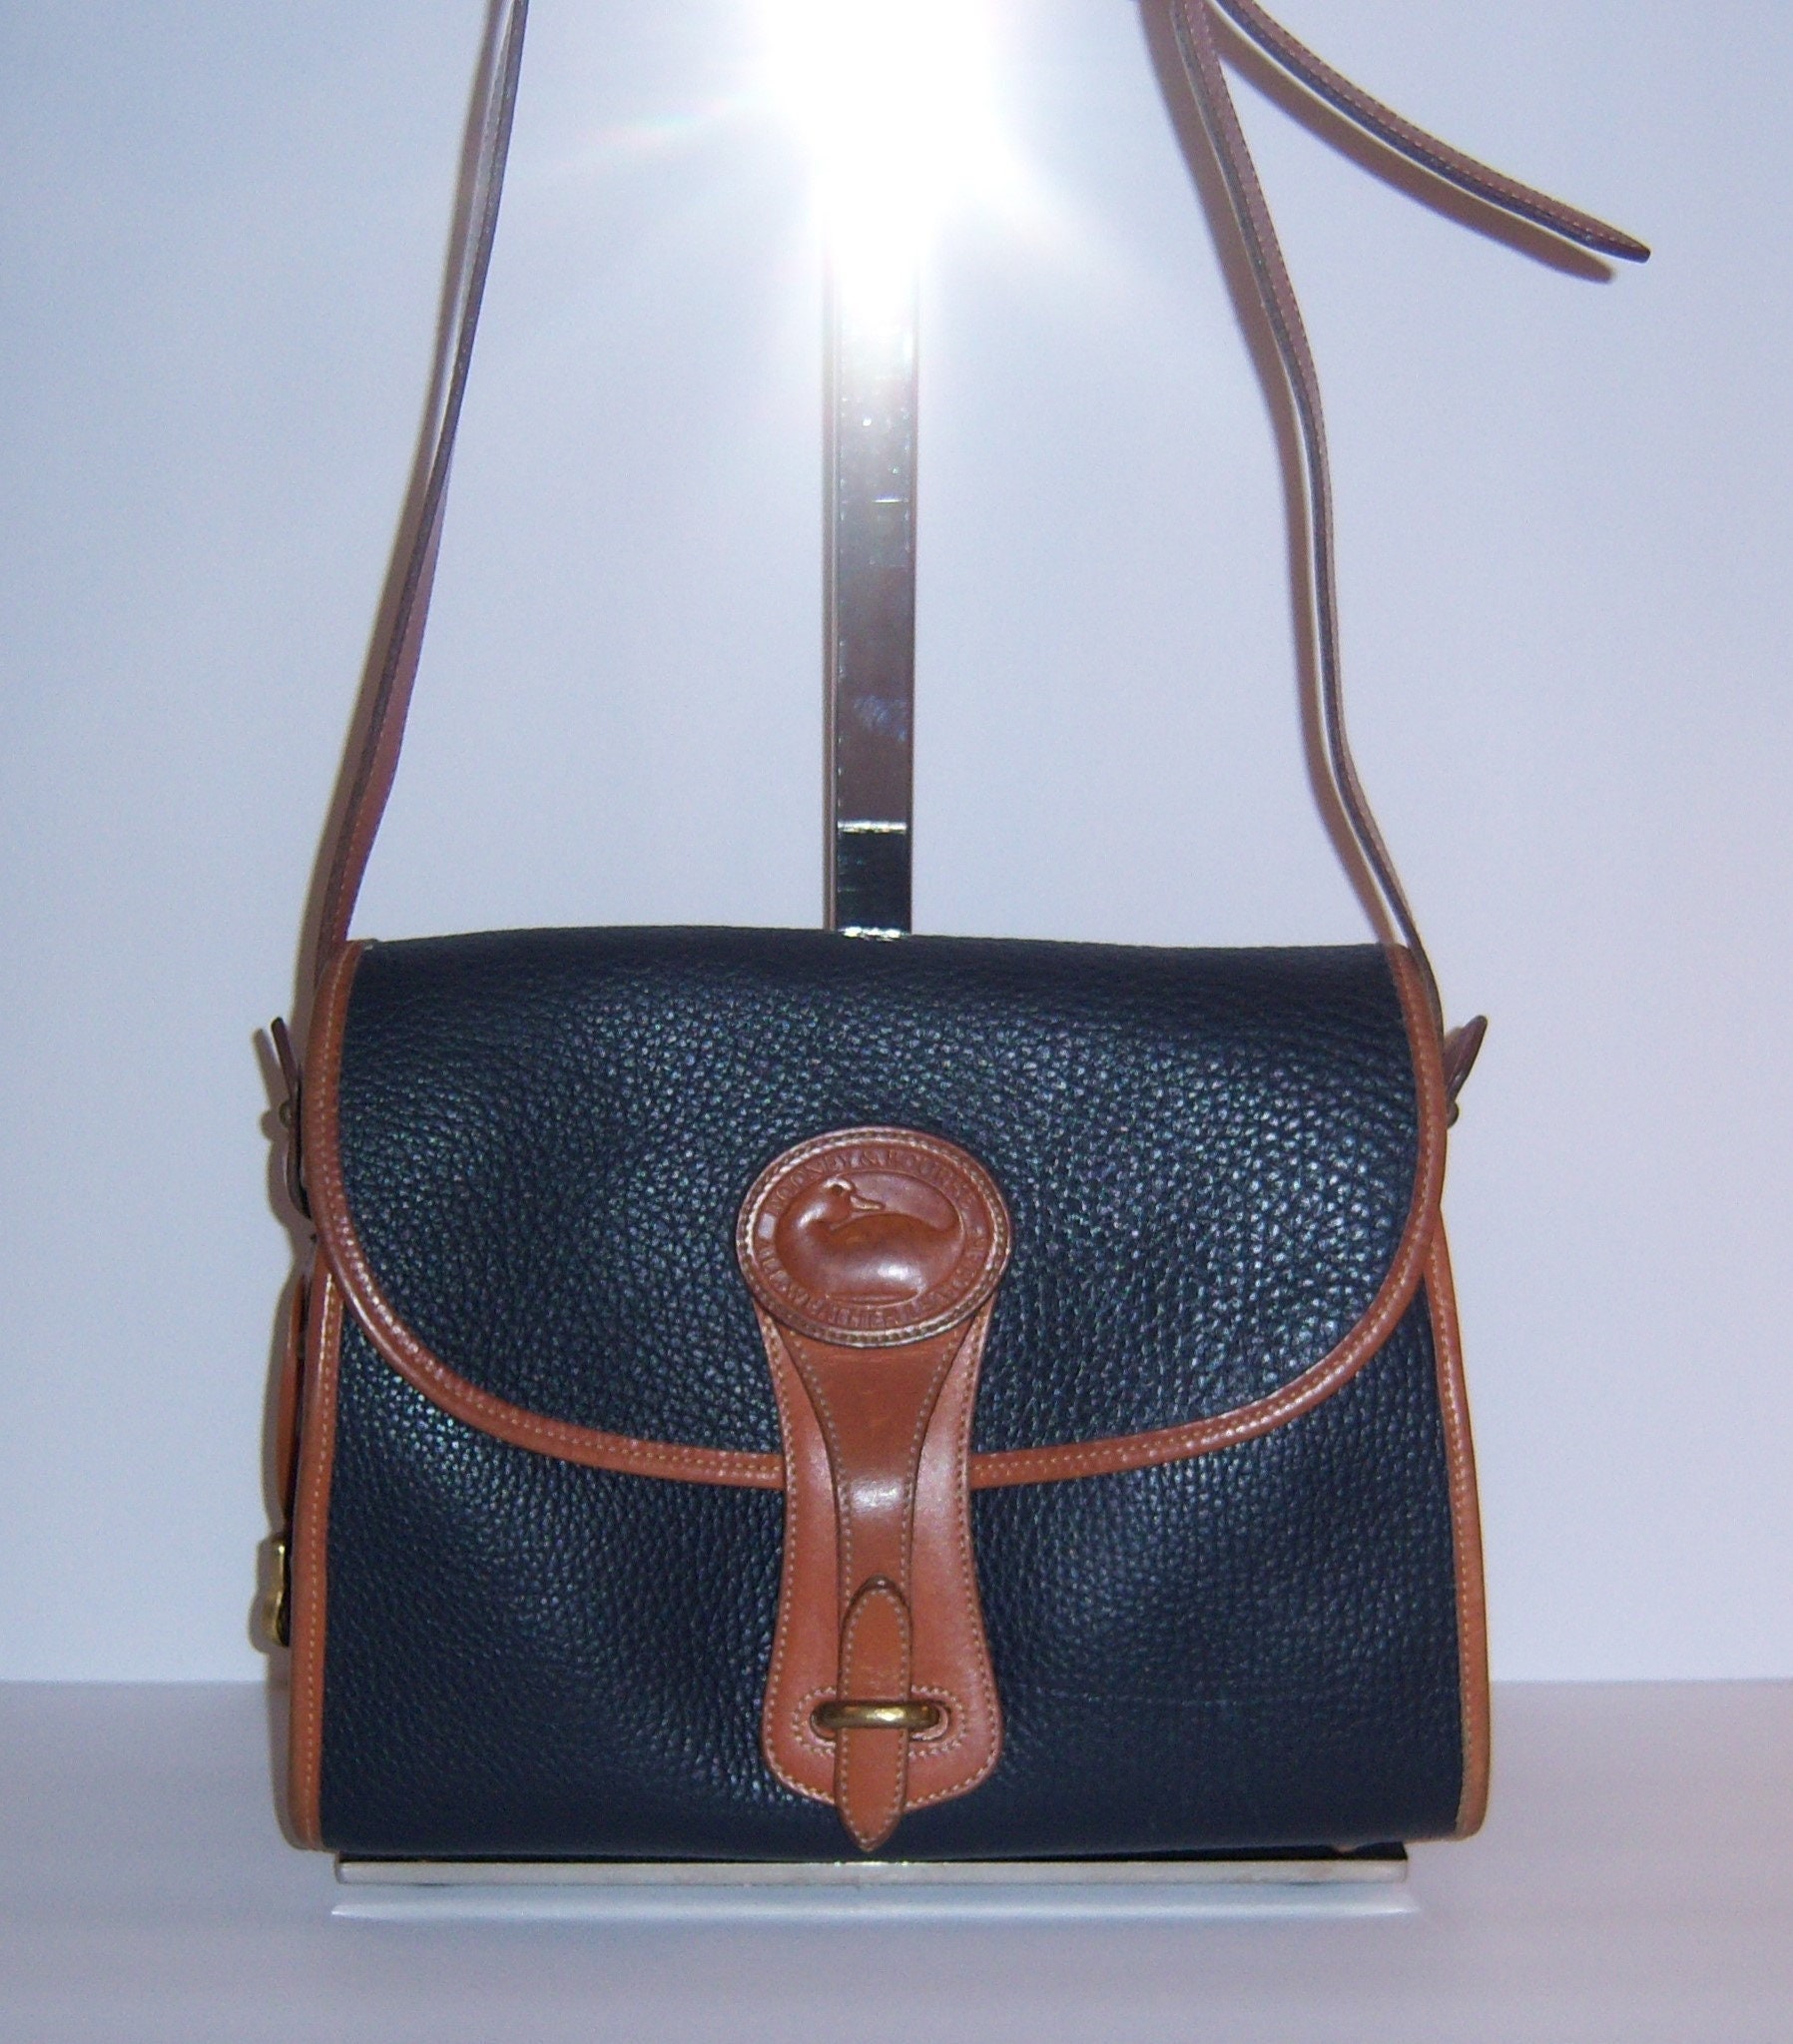 Dooney & Bourke navy satchel handbag purse vintage